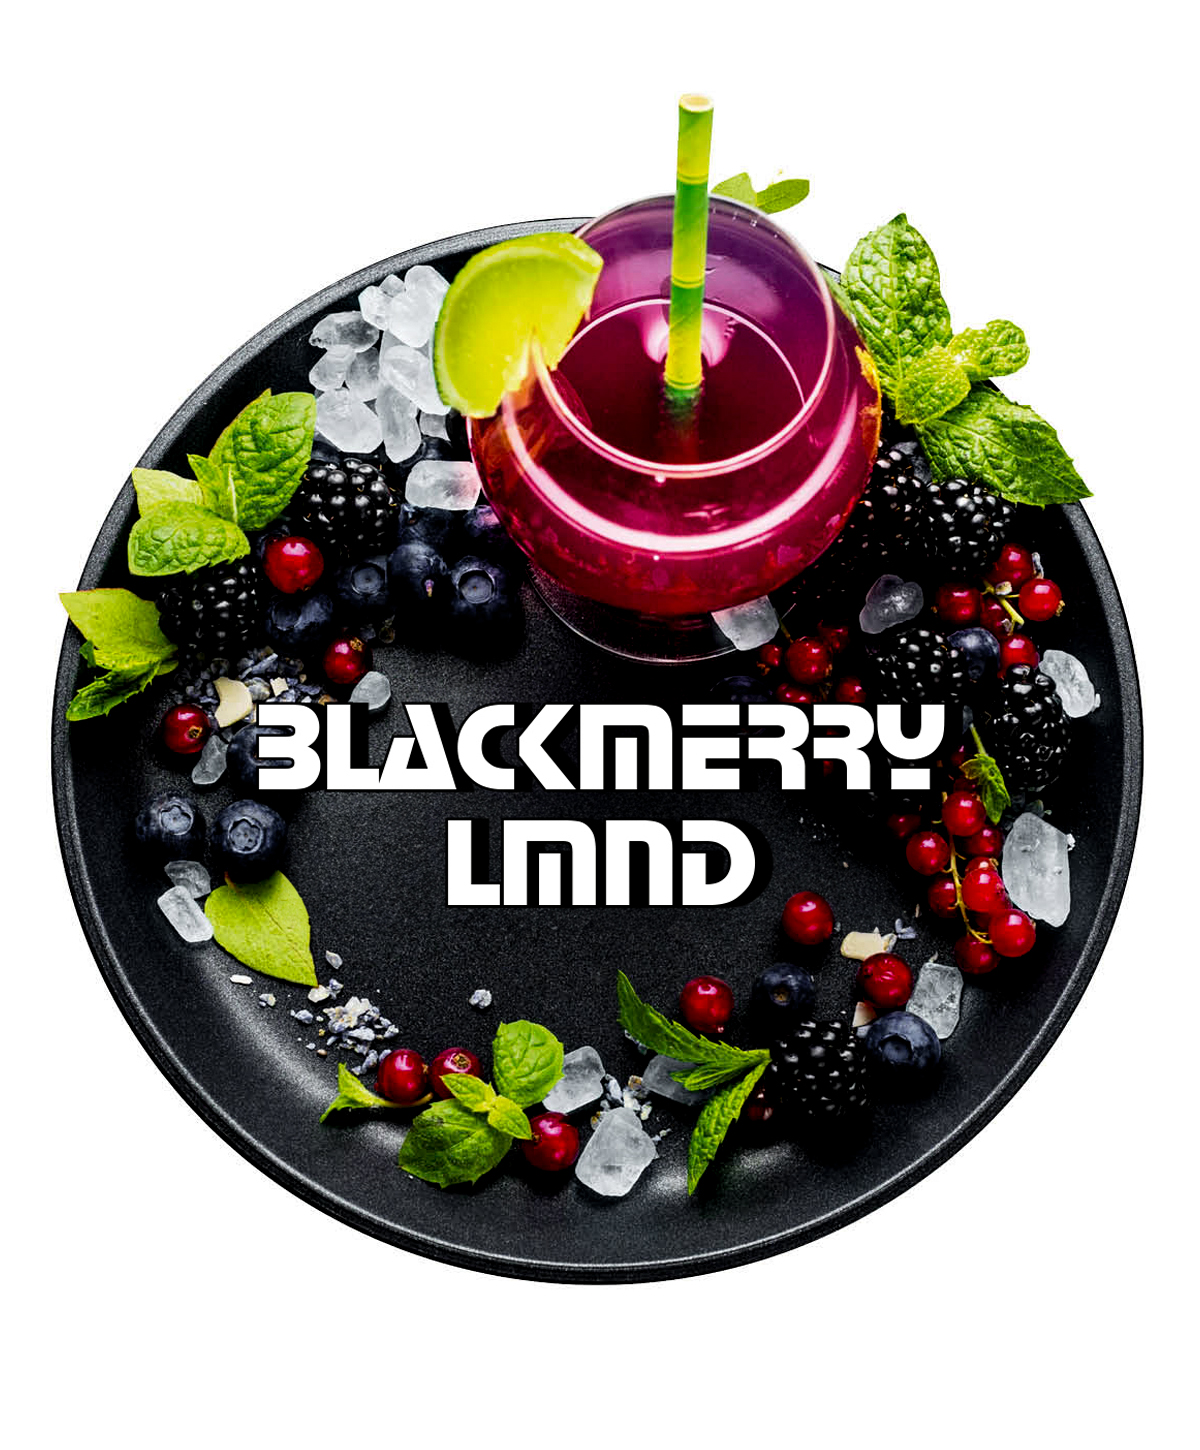 Blackburn Blackmerry Lmnd 25g